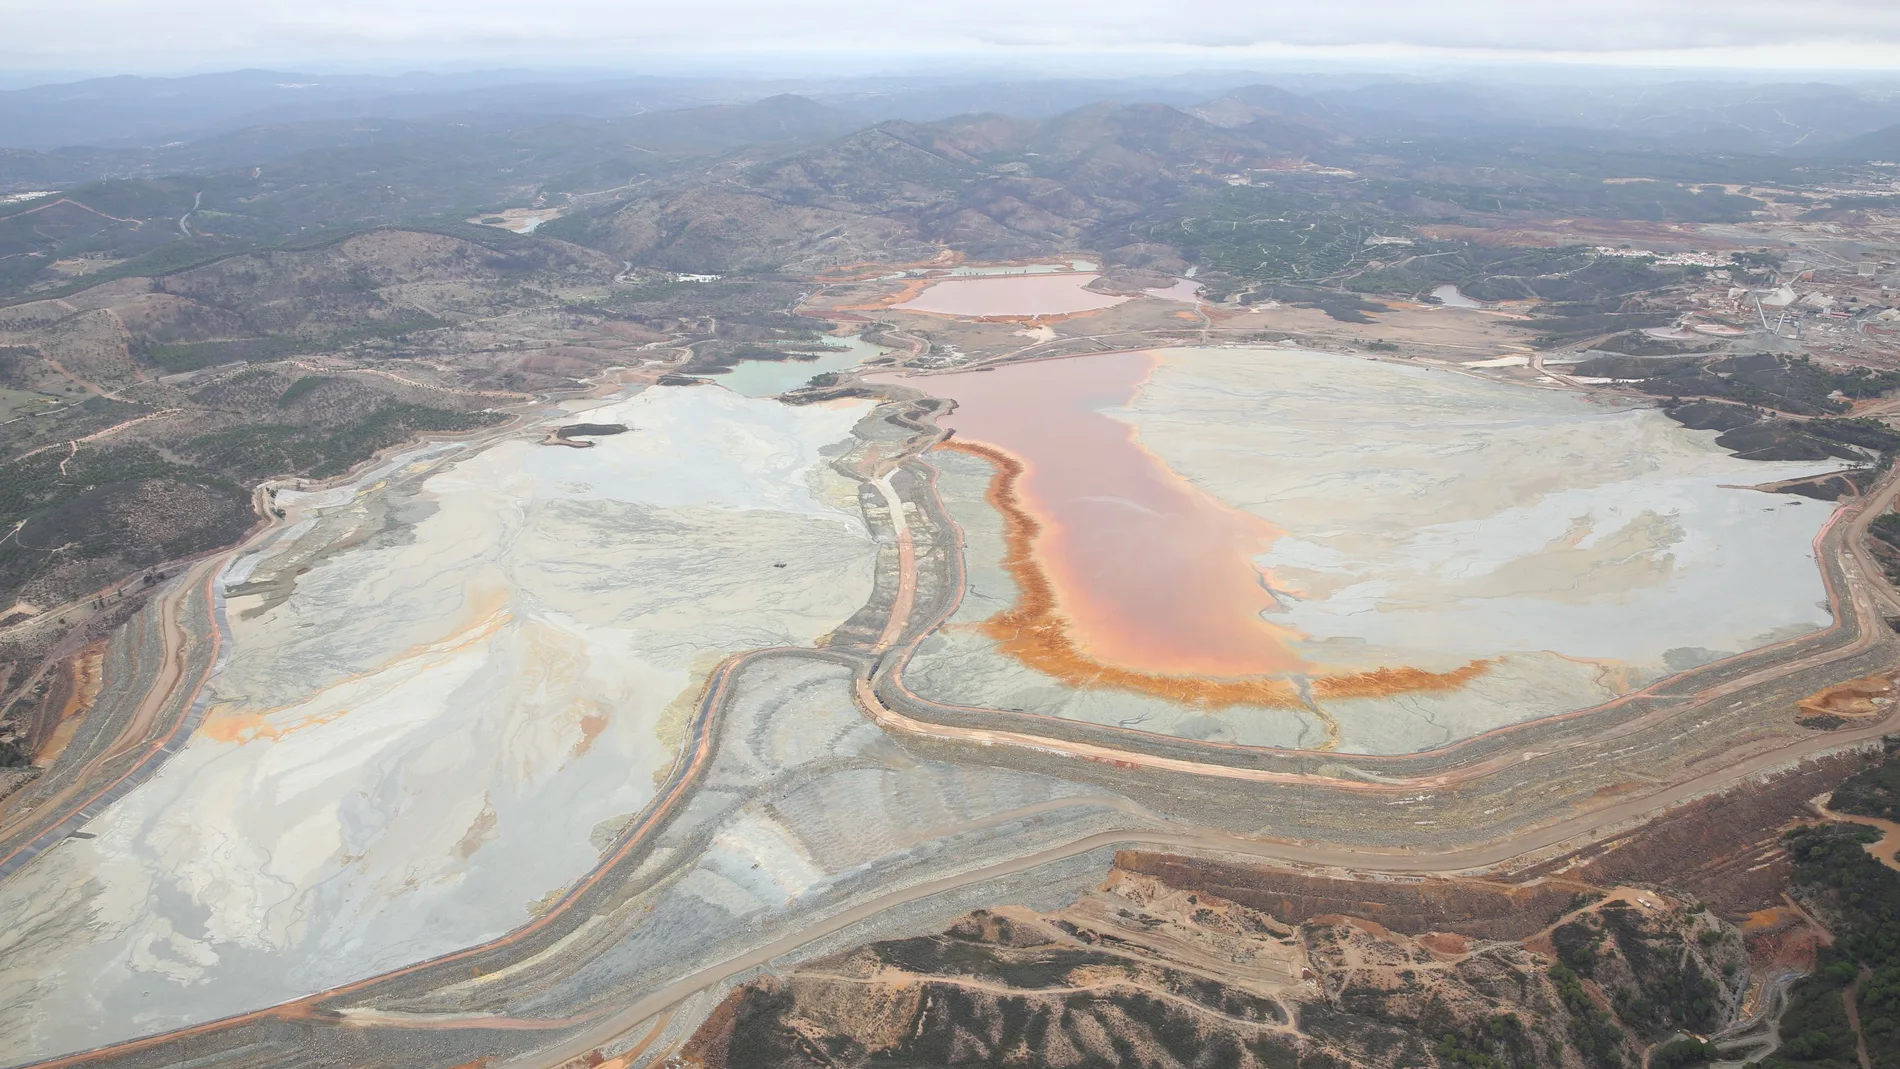 Vista aérea de la zona de la mina de Riotinto